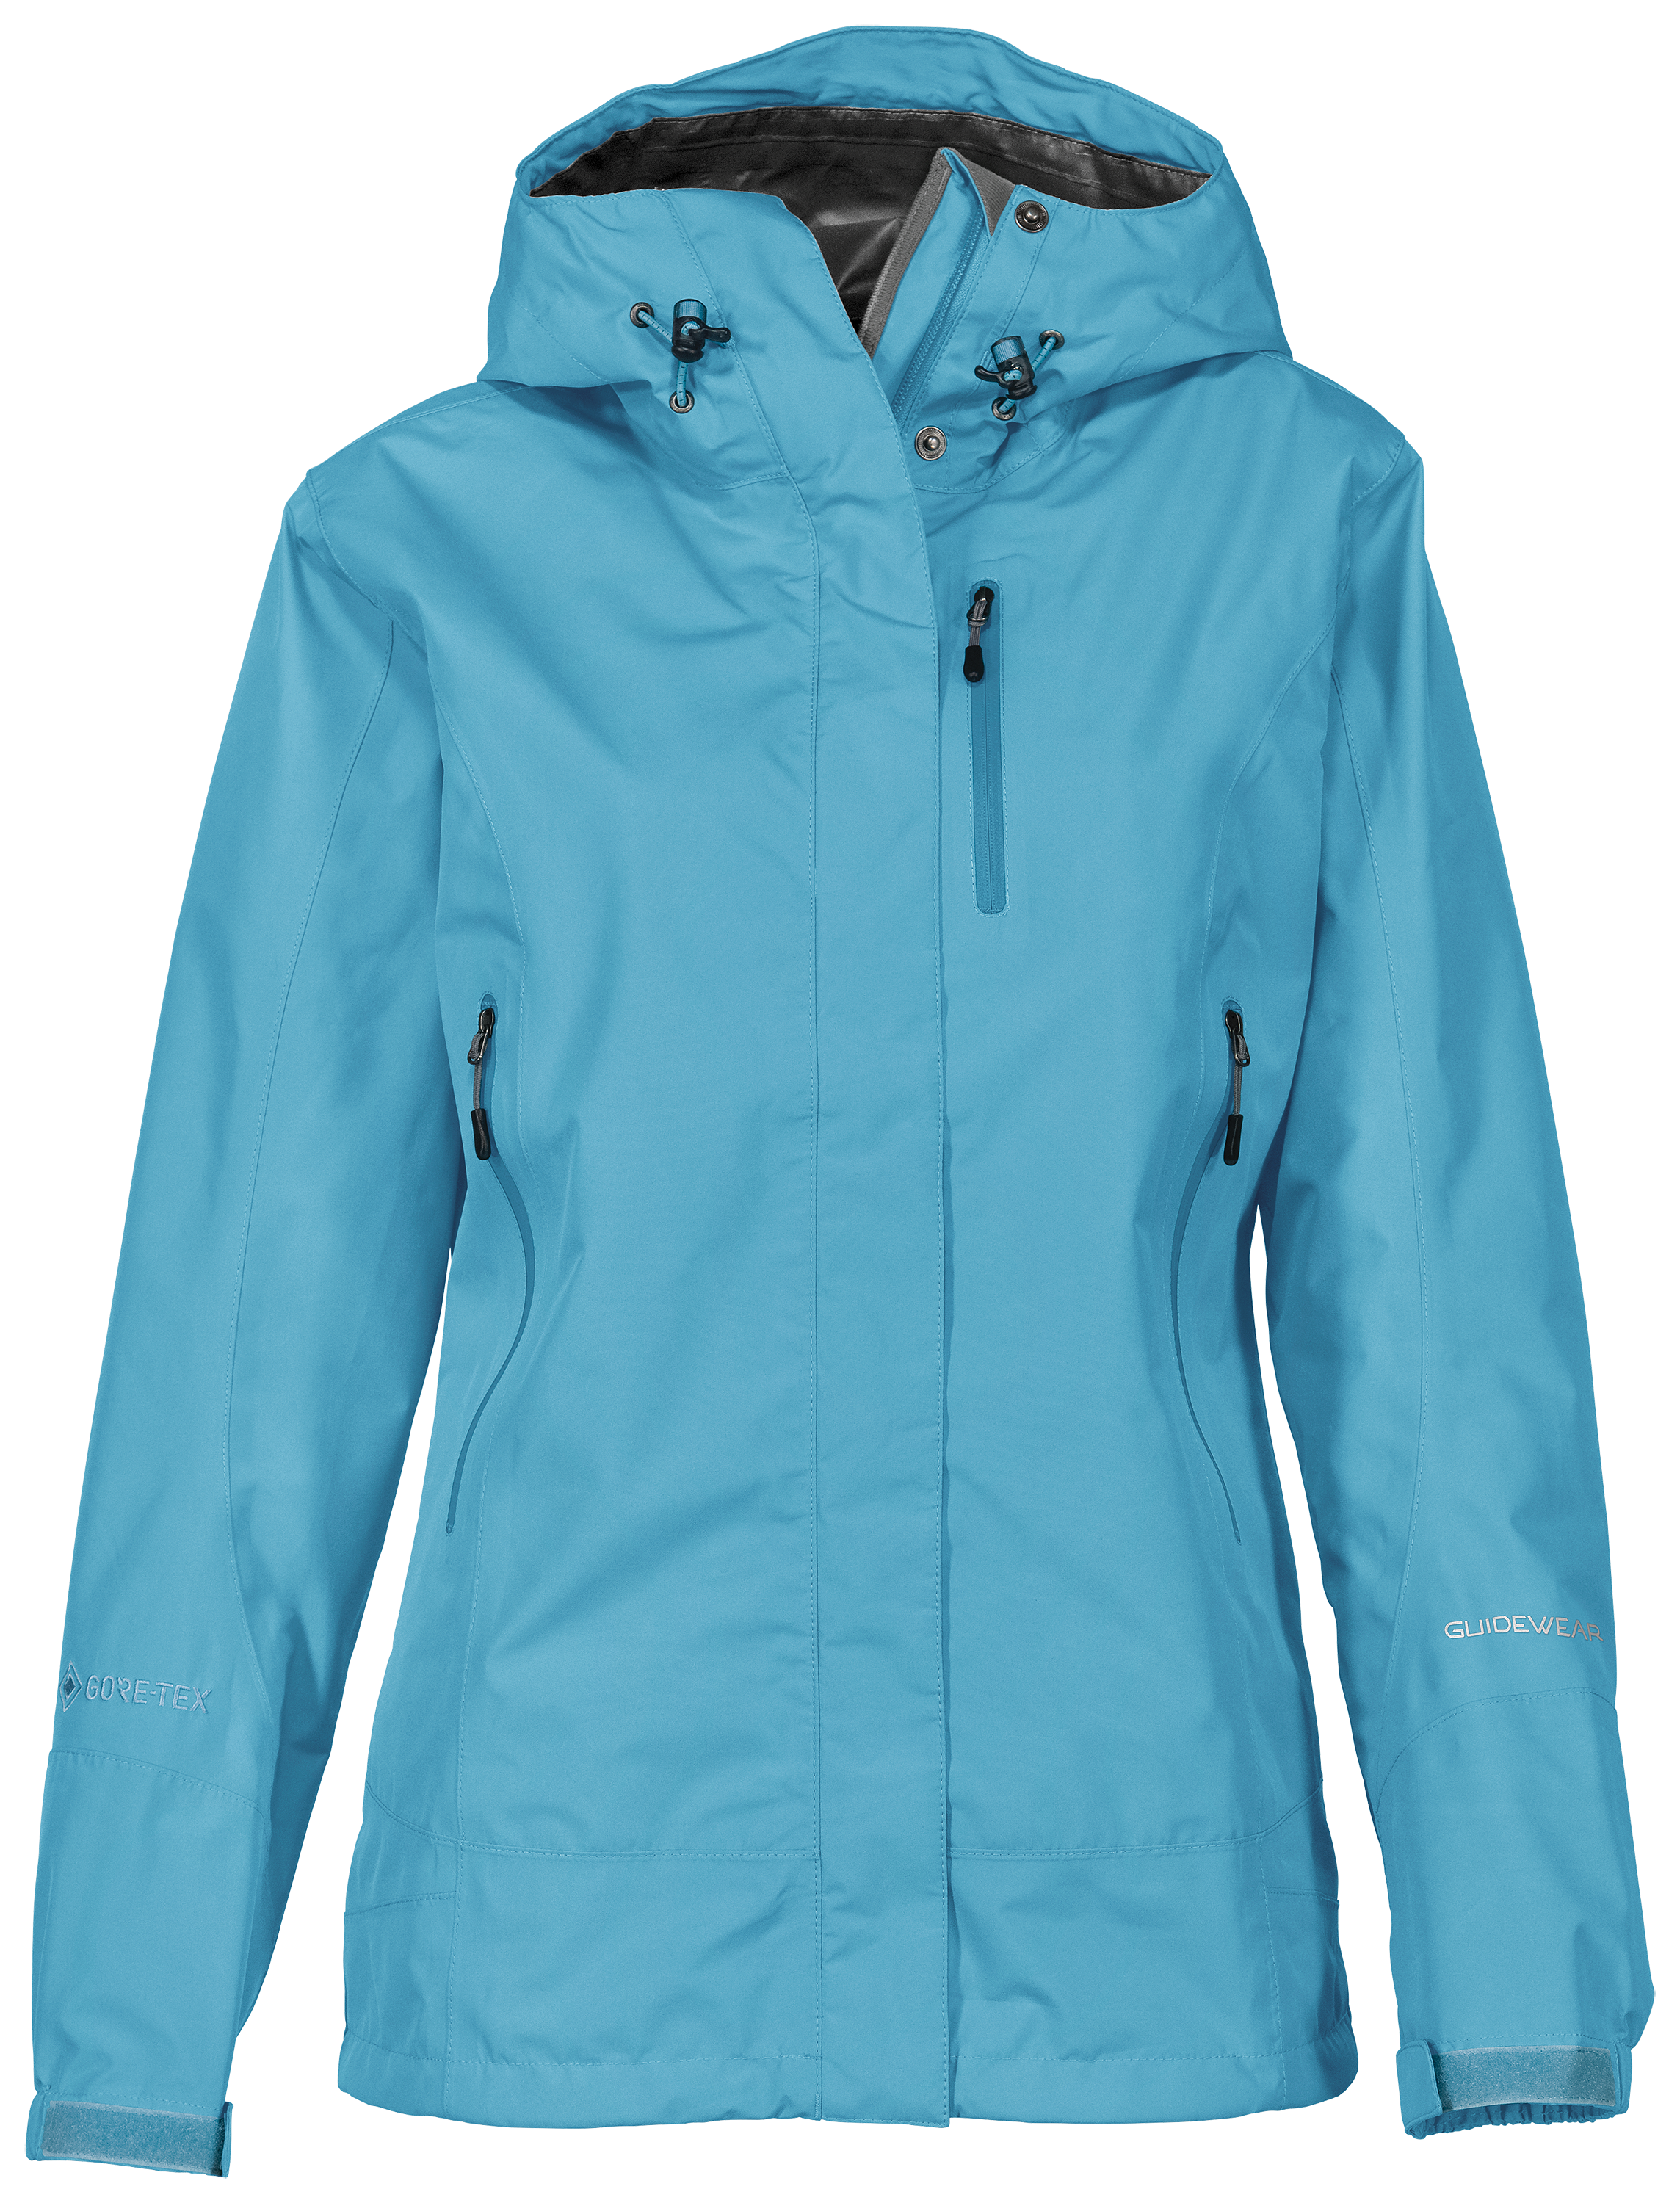 Johnny Morris Bass Pro Shops Guidewear Rainy River Jacket with GORE-TEX PacLite for Ladies - Delphinium Blue - 2XL